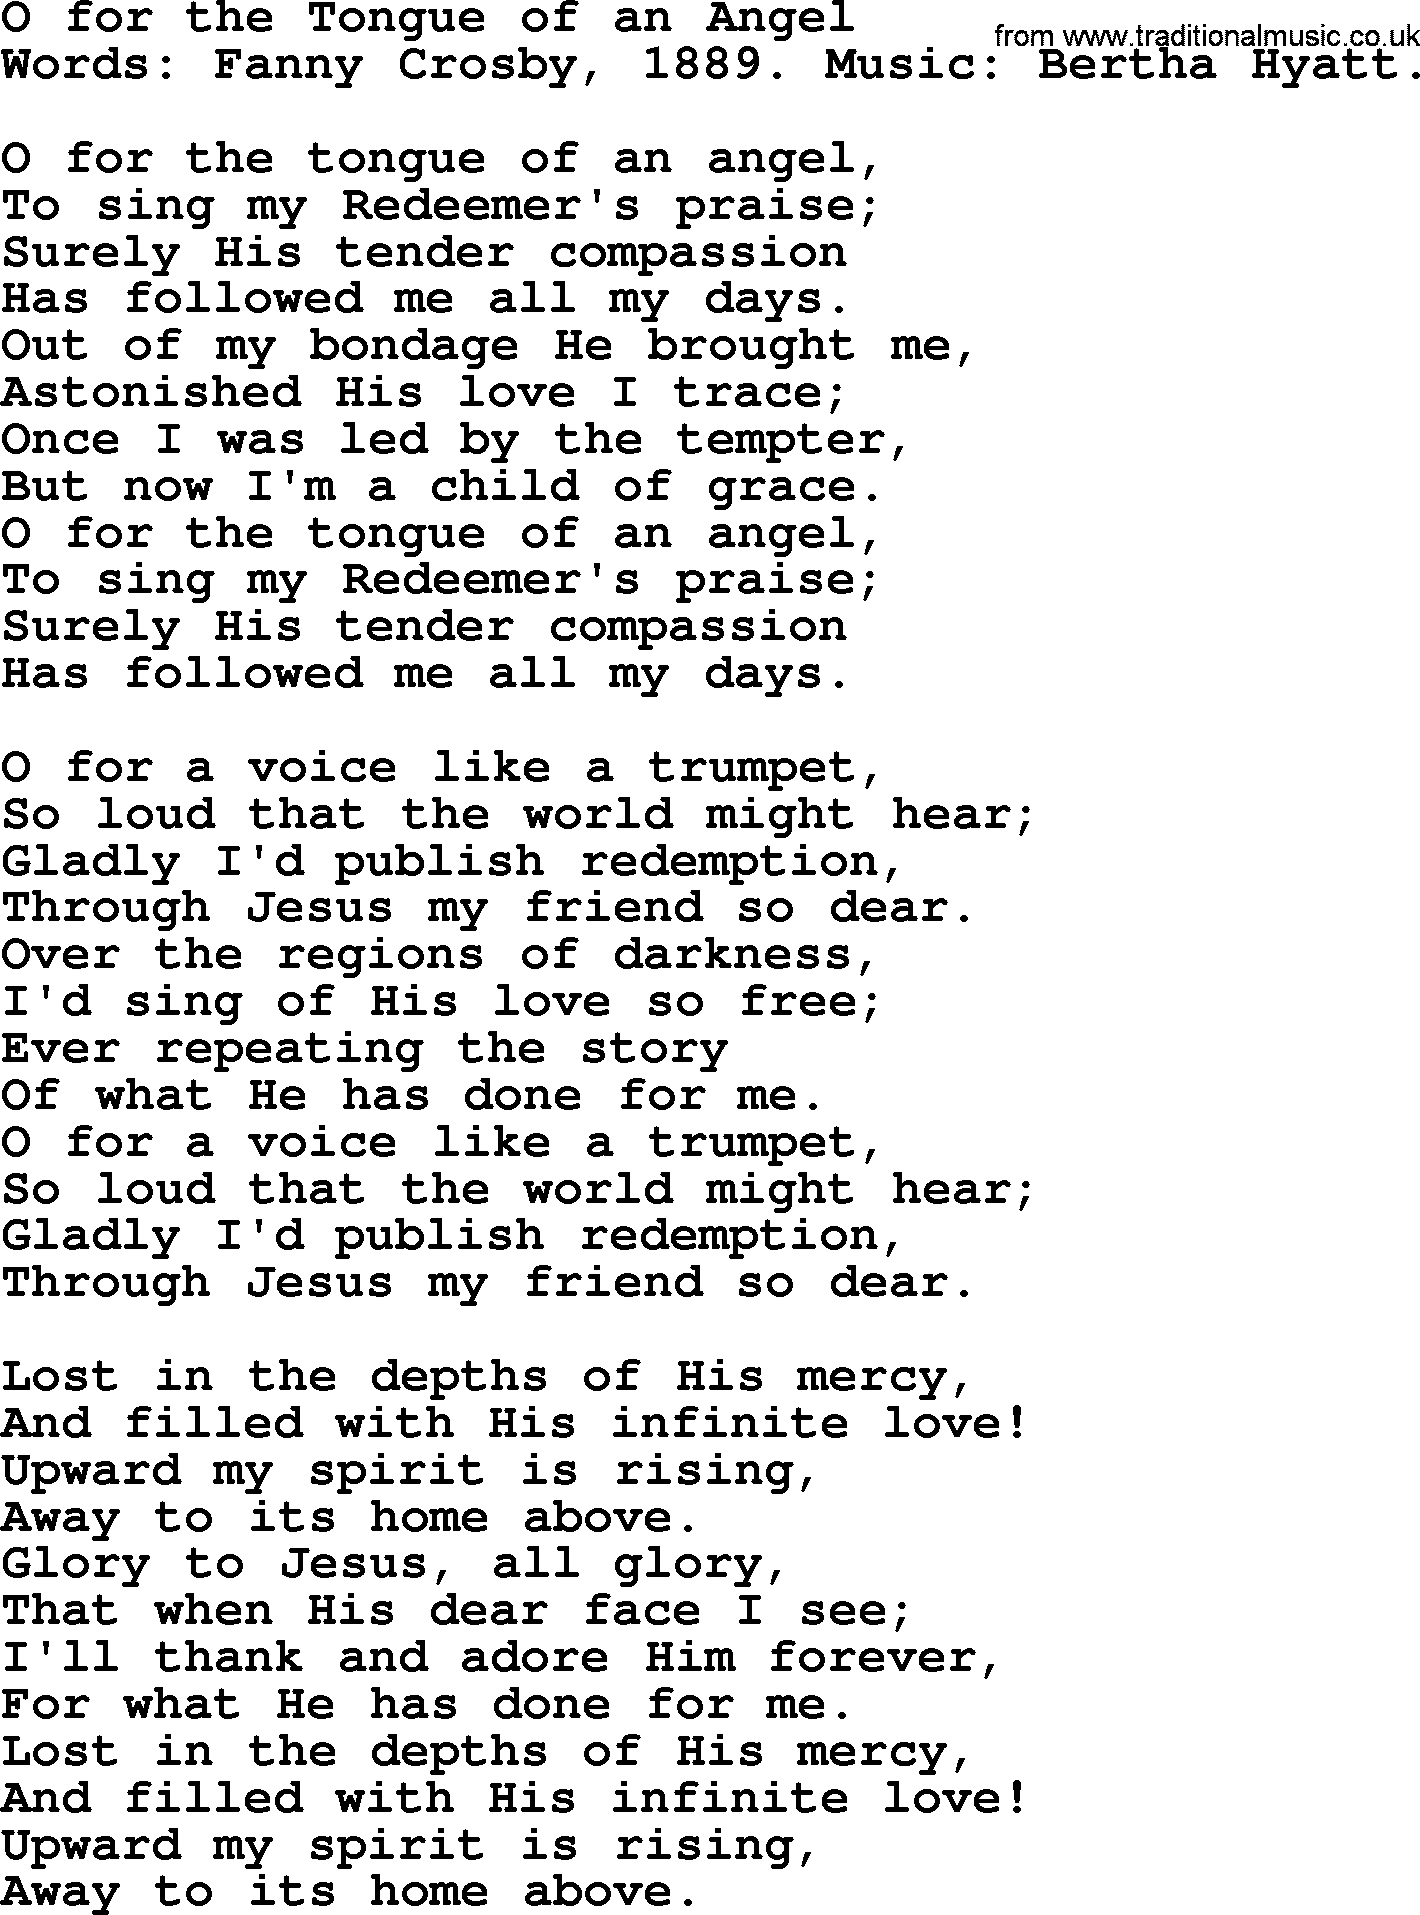 Fanny Crosby song: O For The Tongue Of An Angel, lyrics